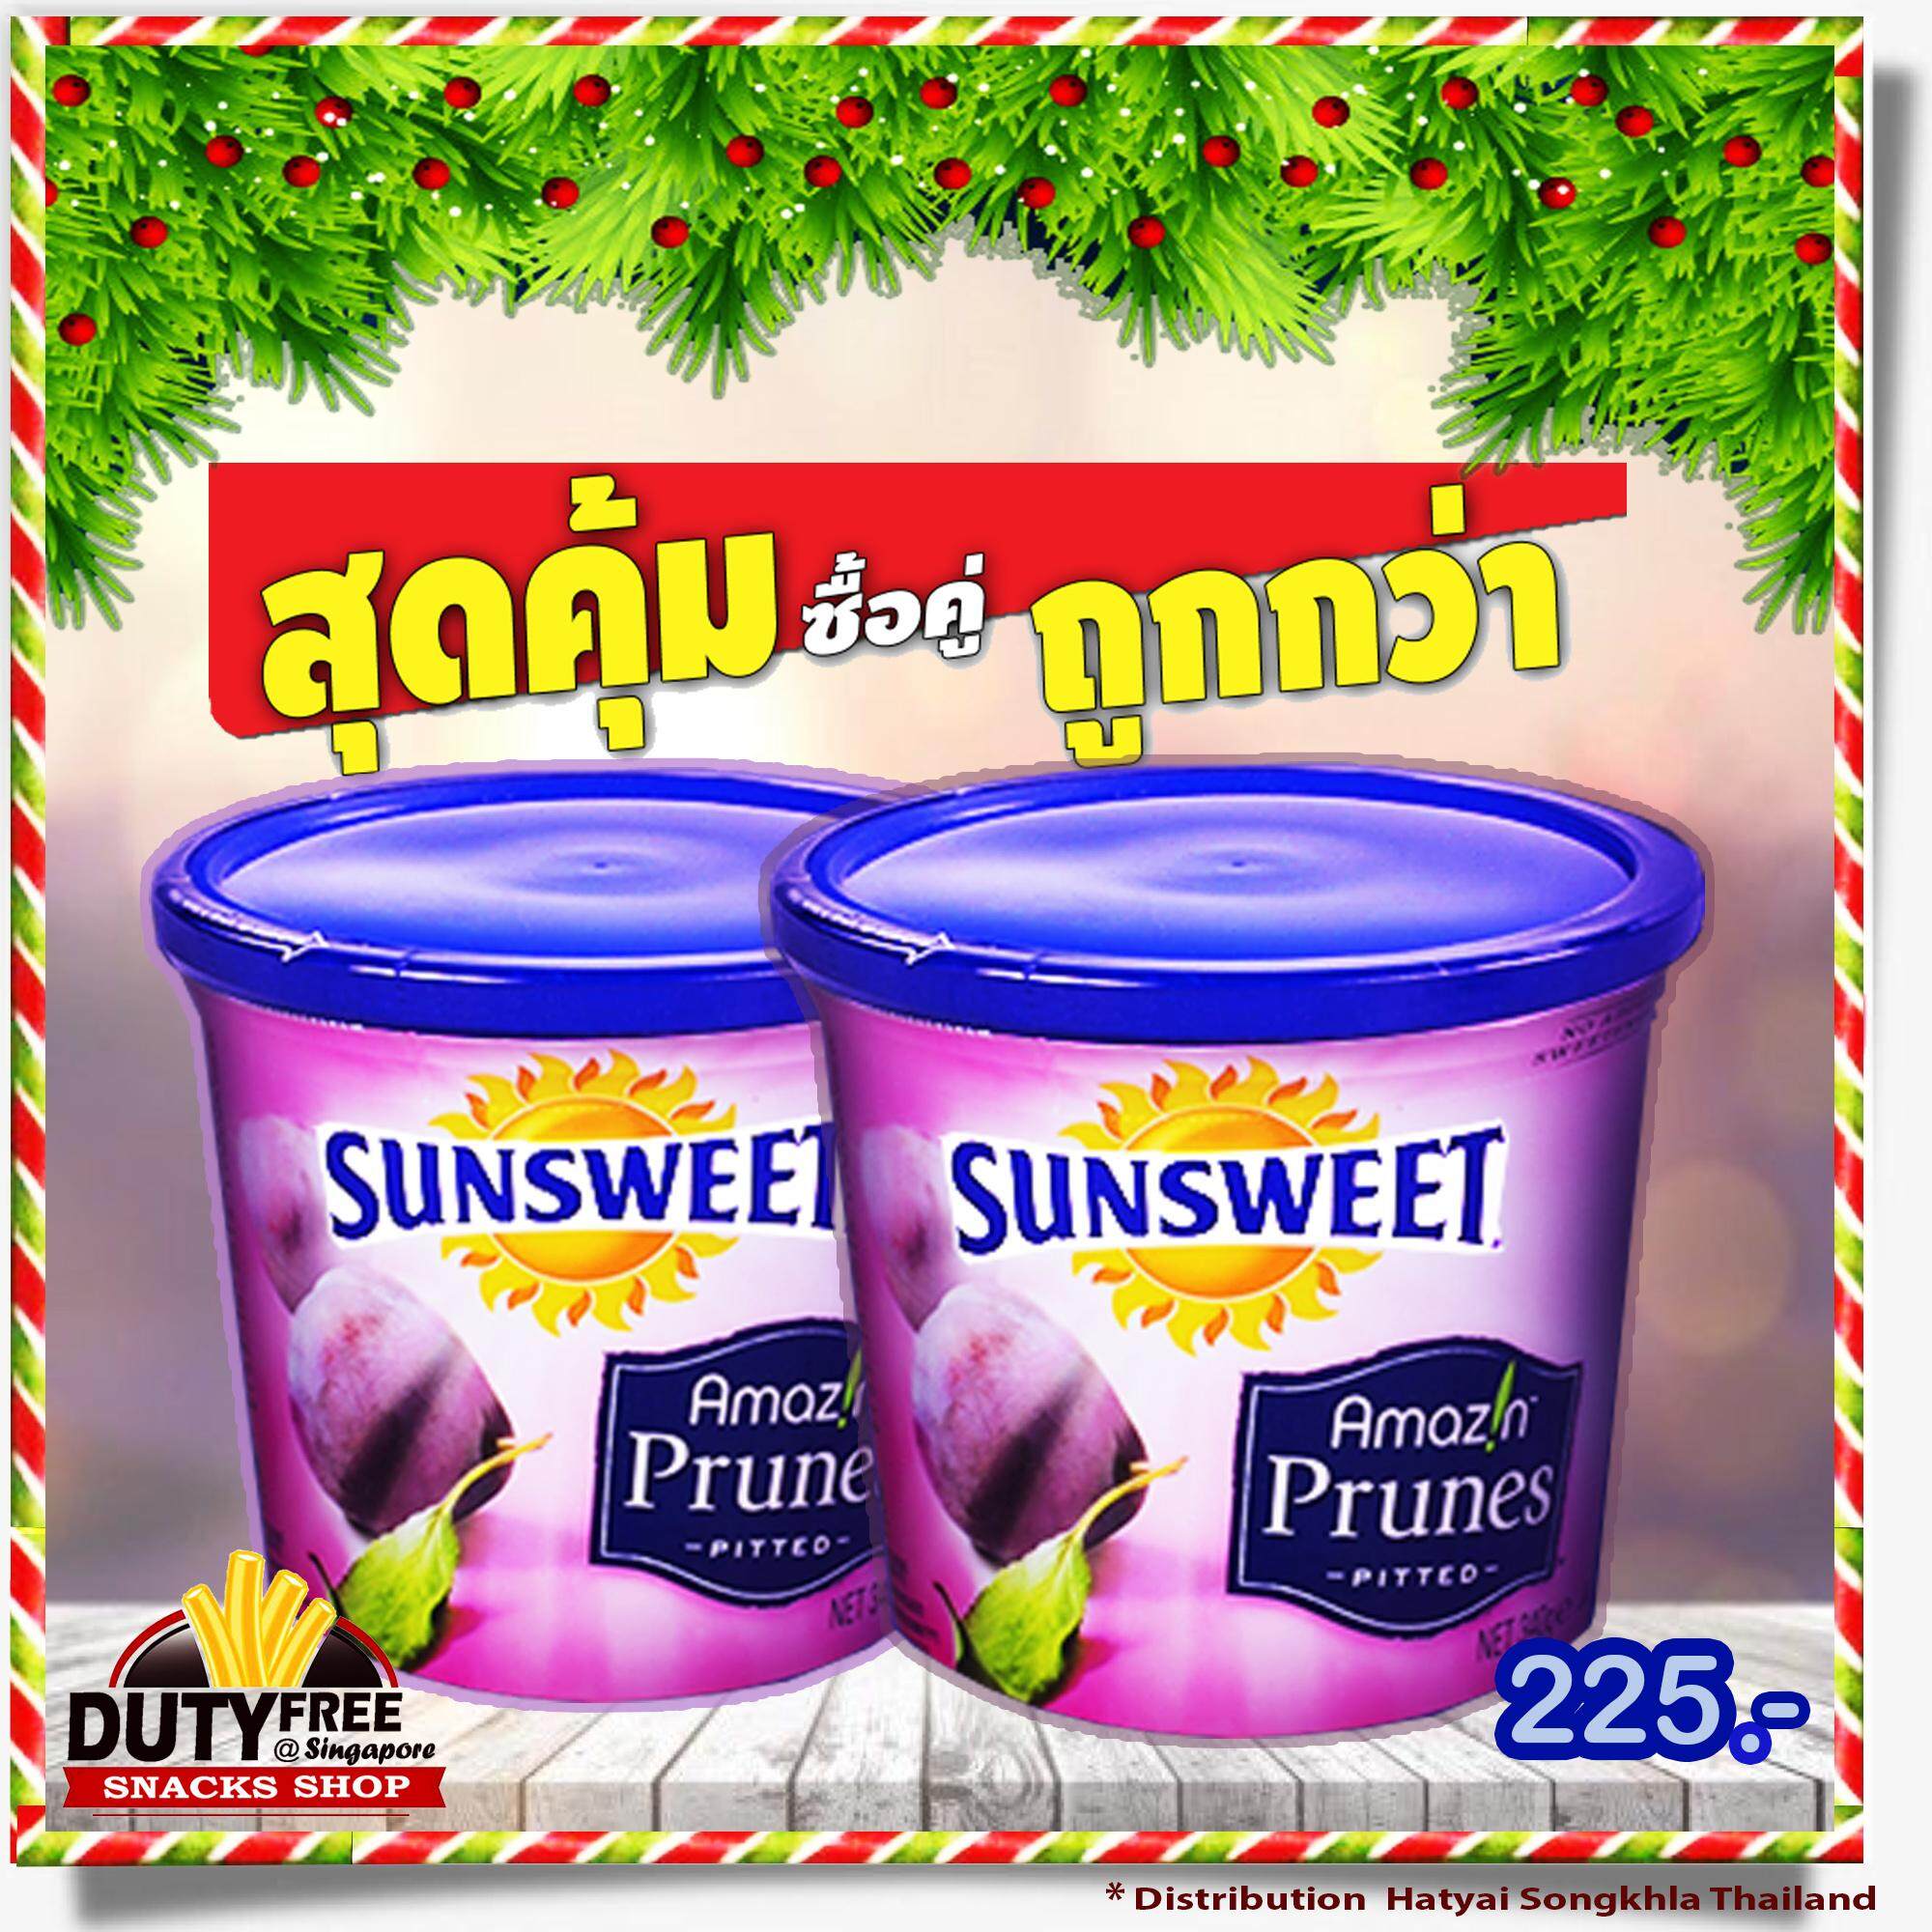 download sunsweet prunes